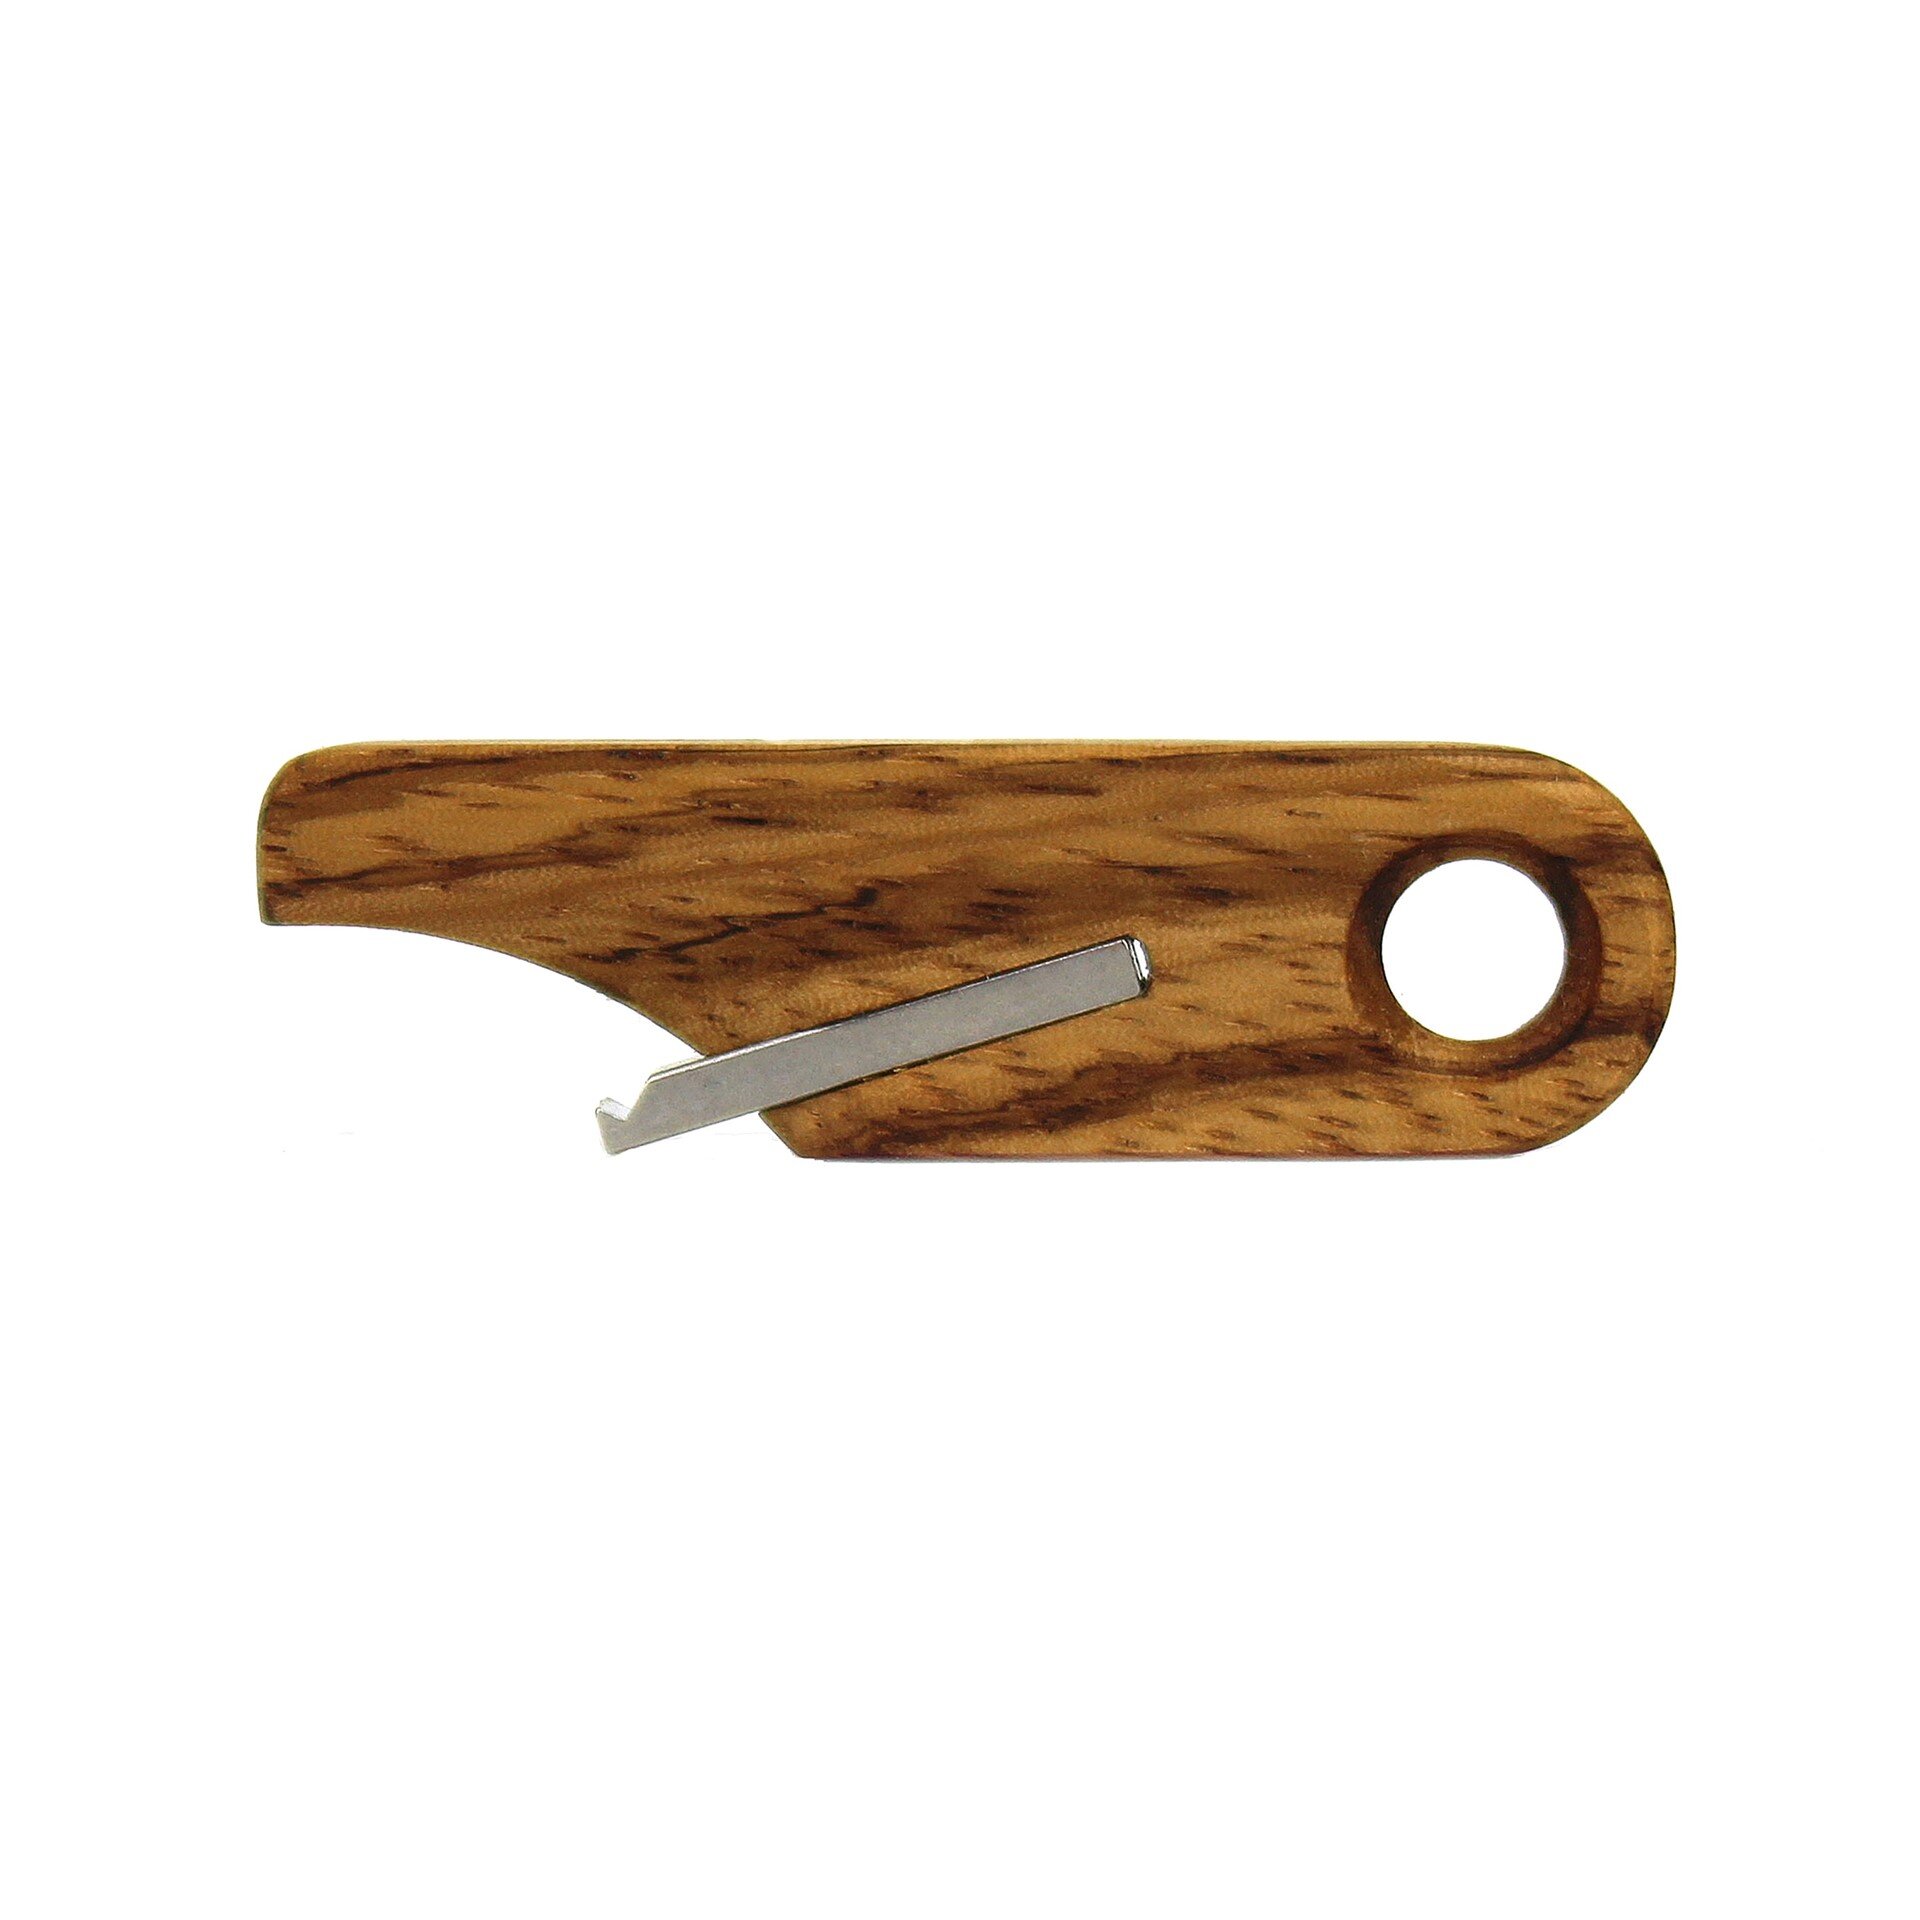 Wooden Bottle Opener Keychain by Rift Wood Company - Zebrawood.JPG